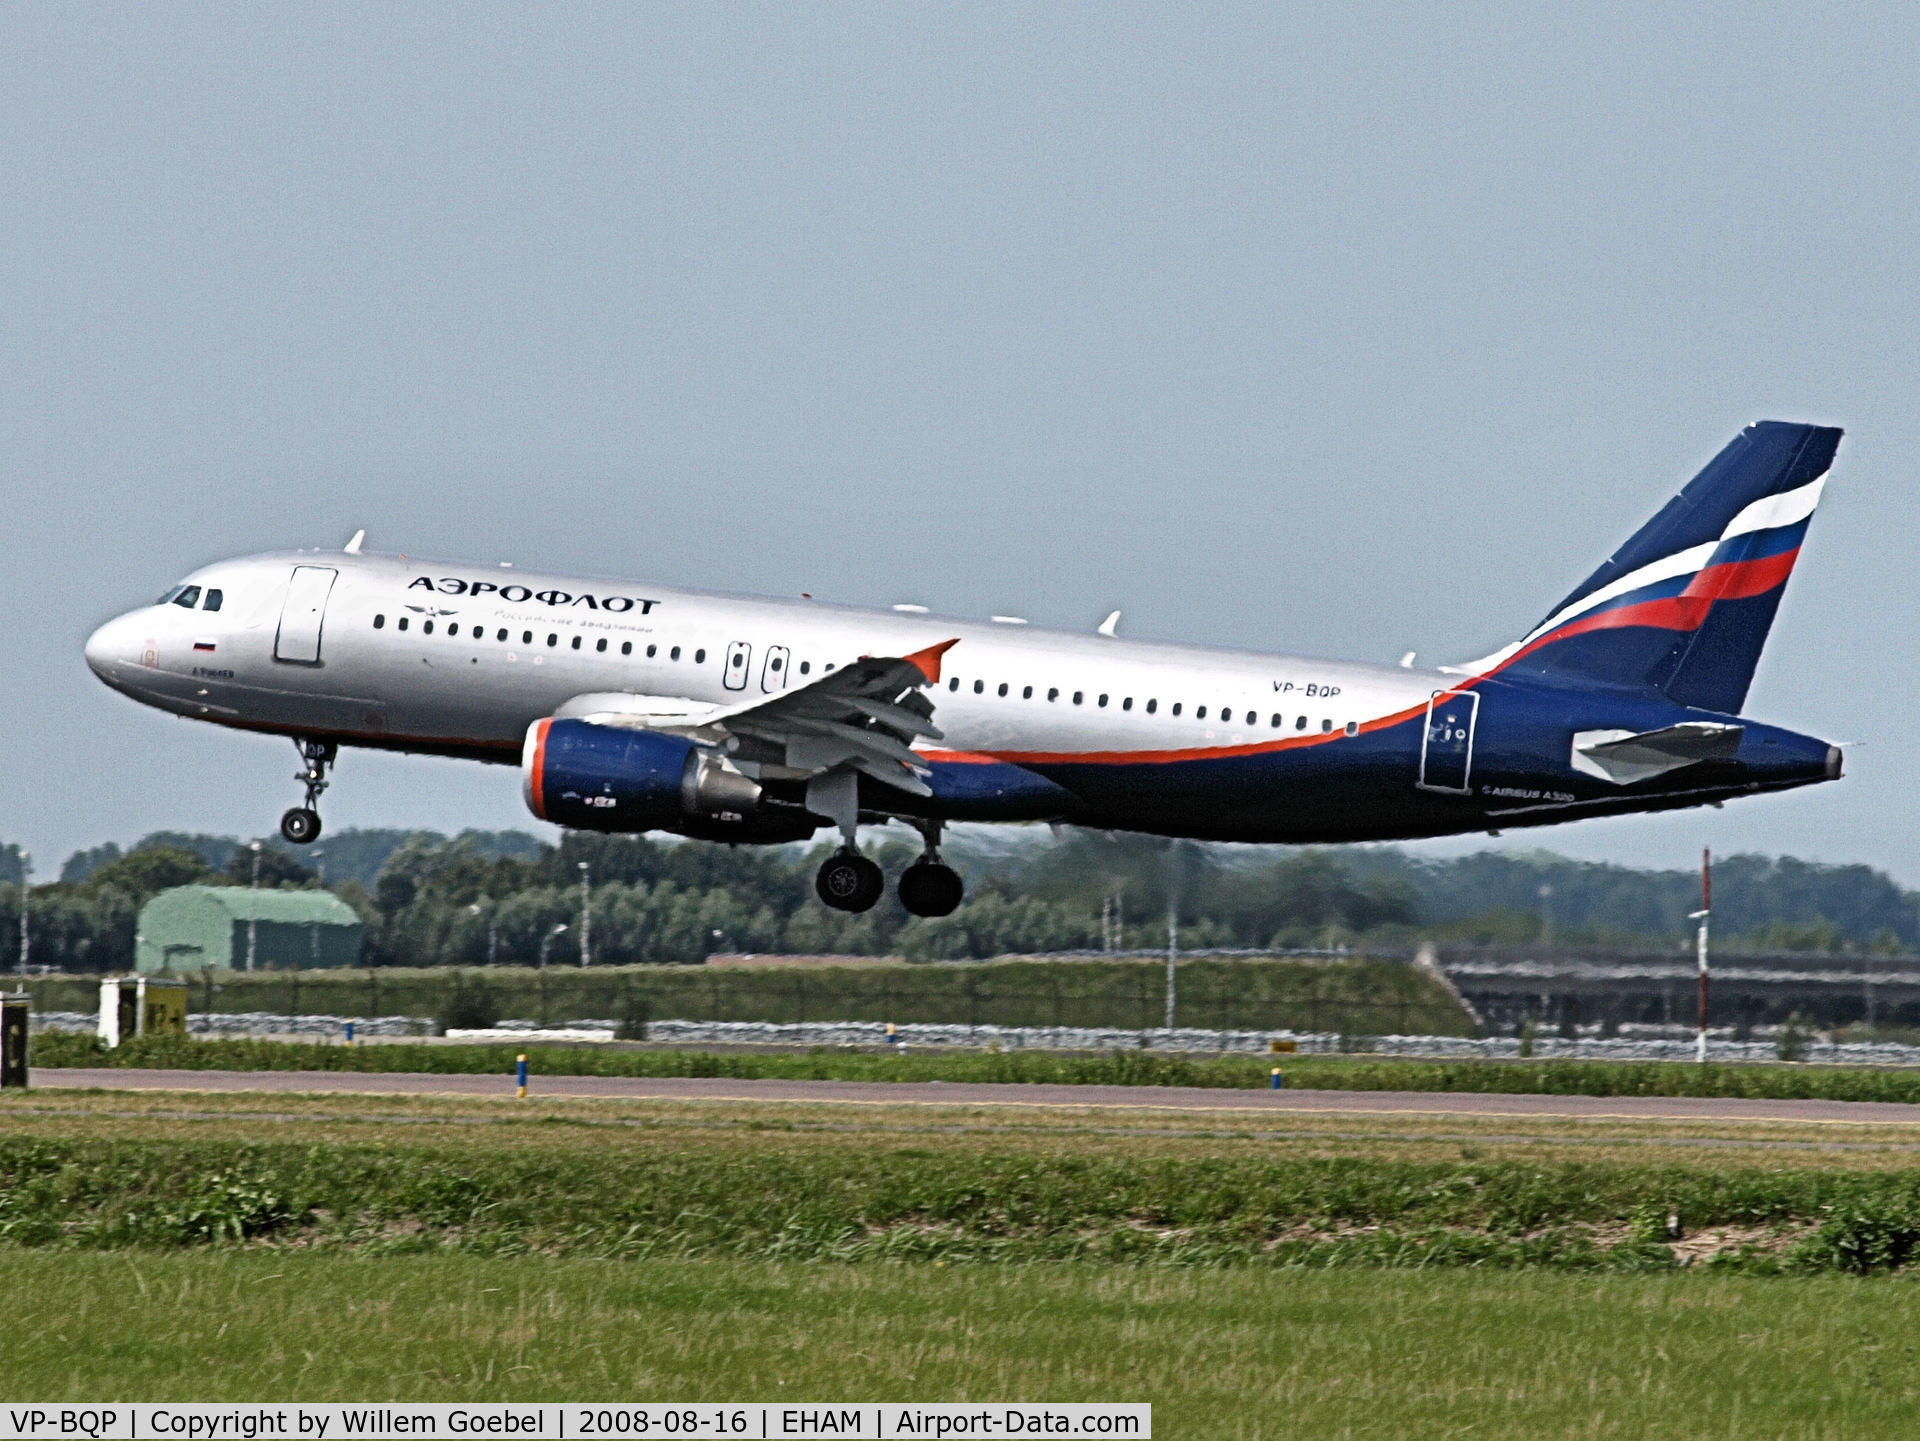 VP-BQP, 2006 Airbus A320-214 C/N 2875, Landing on Schiphol Airport